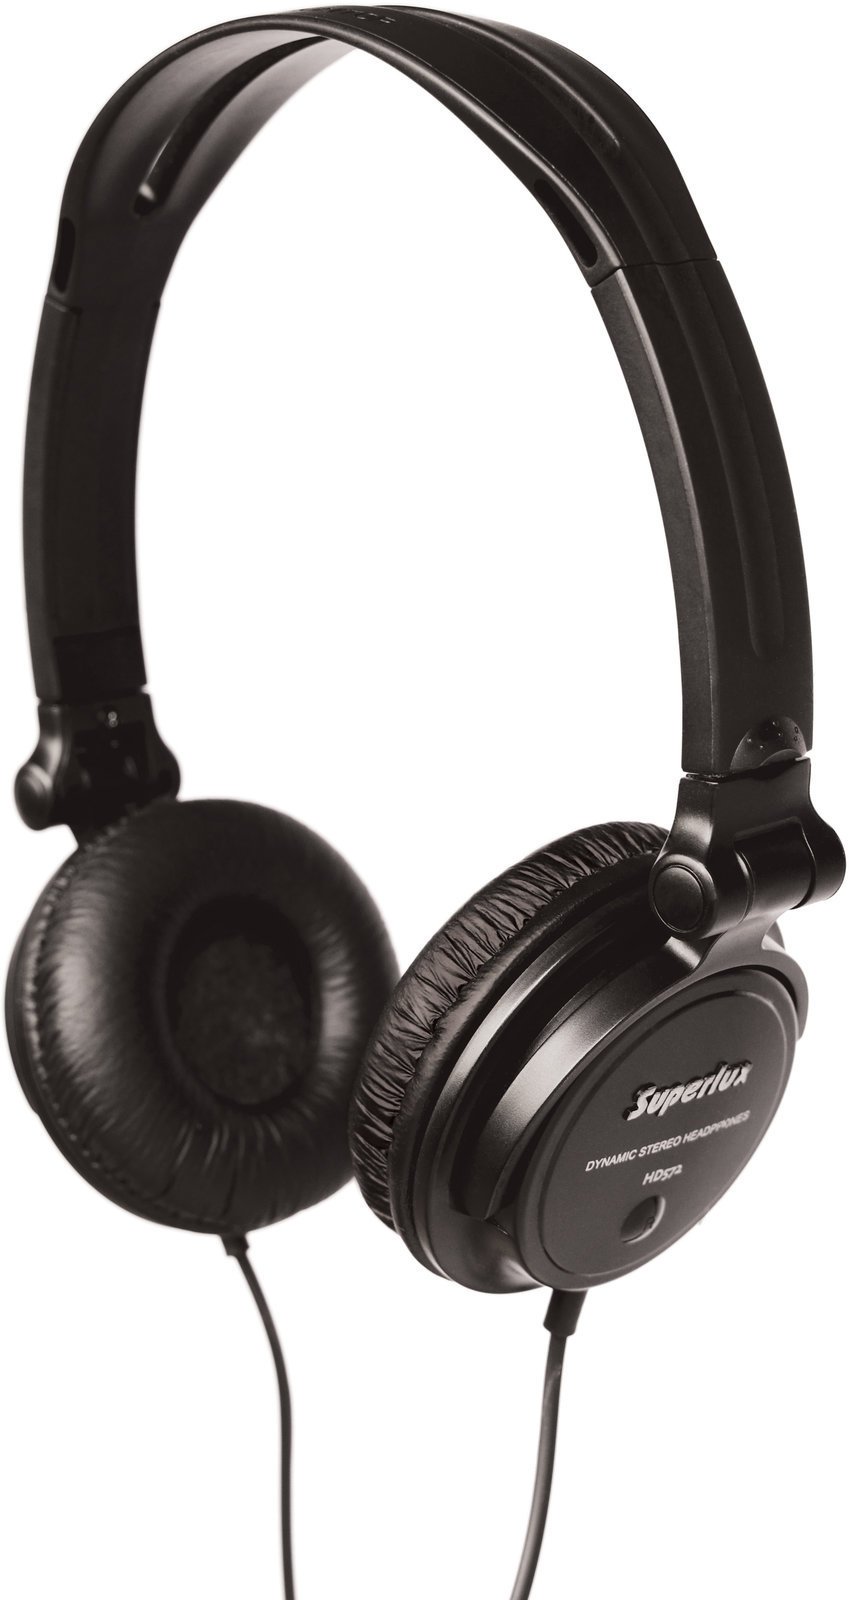 On-ear Headphones Superlux HD572 Black (Just unboxed)